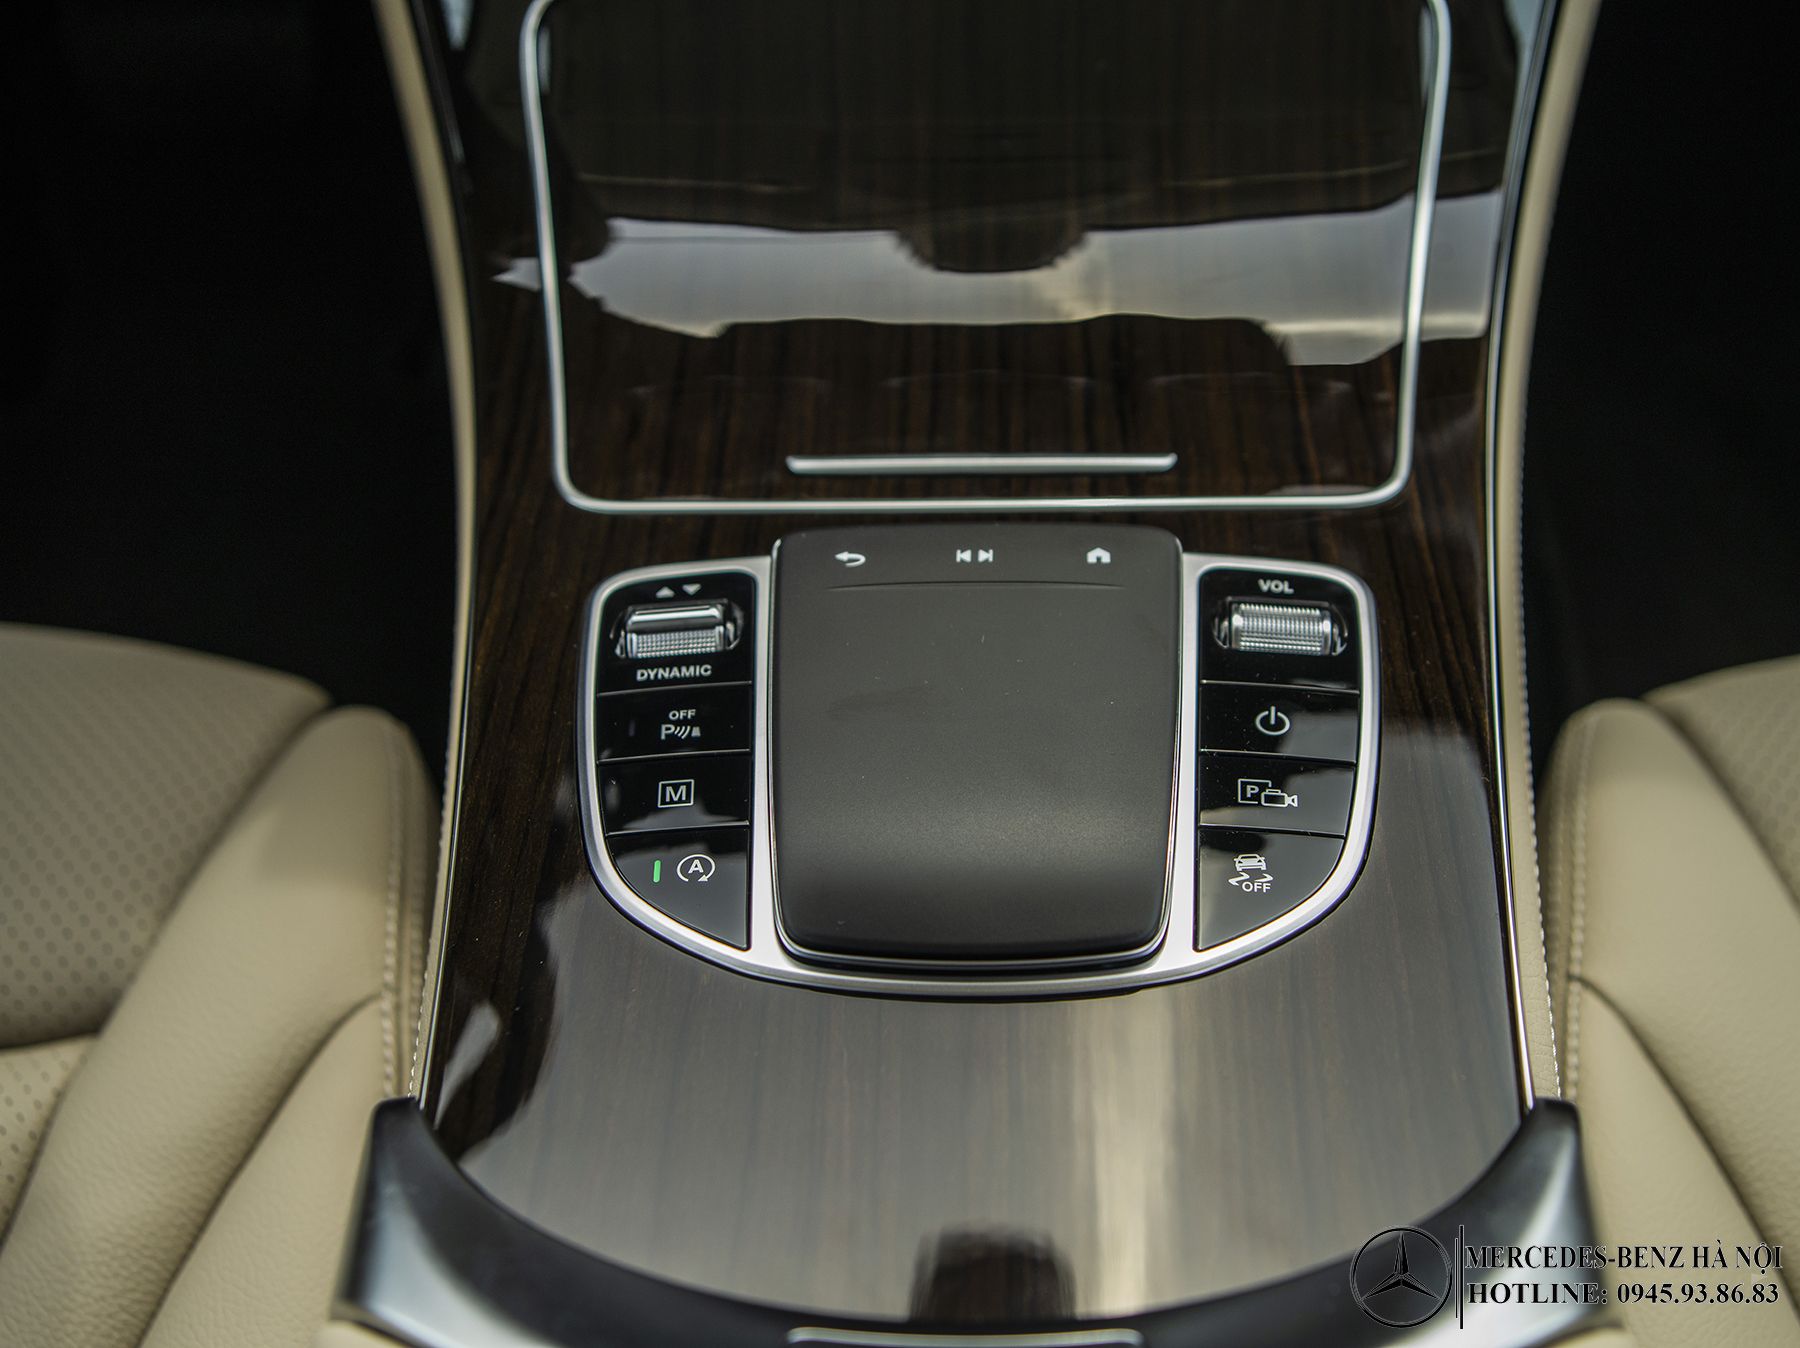 touchpad-noi-that-Mercedes-Benz-GLC-200-2020_mercedeshanoi-com-vn